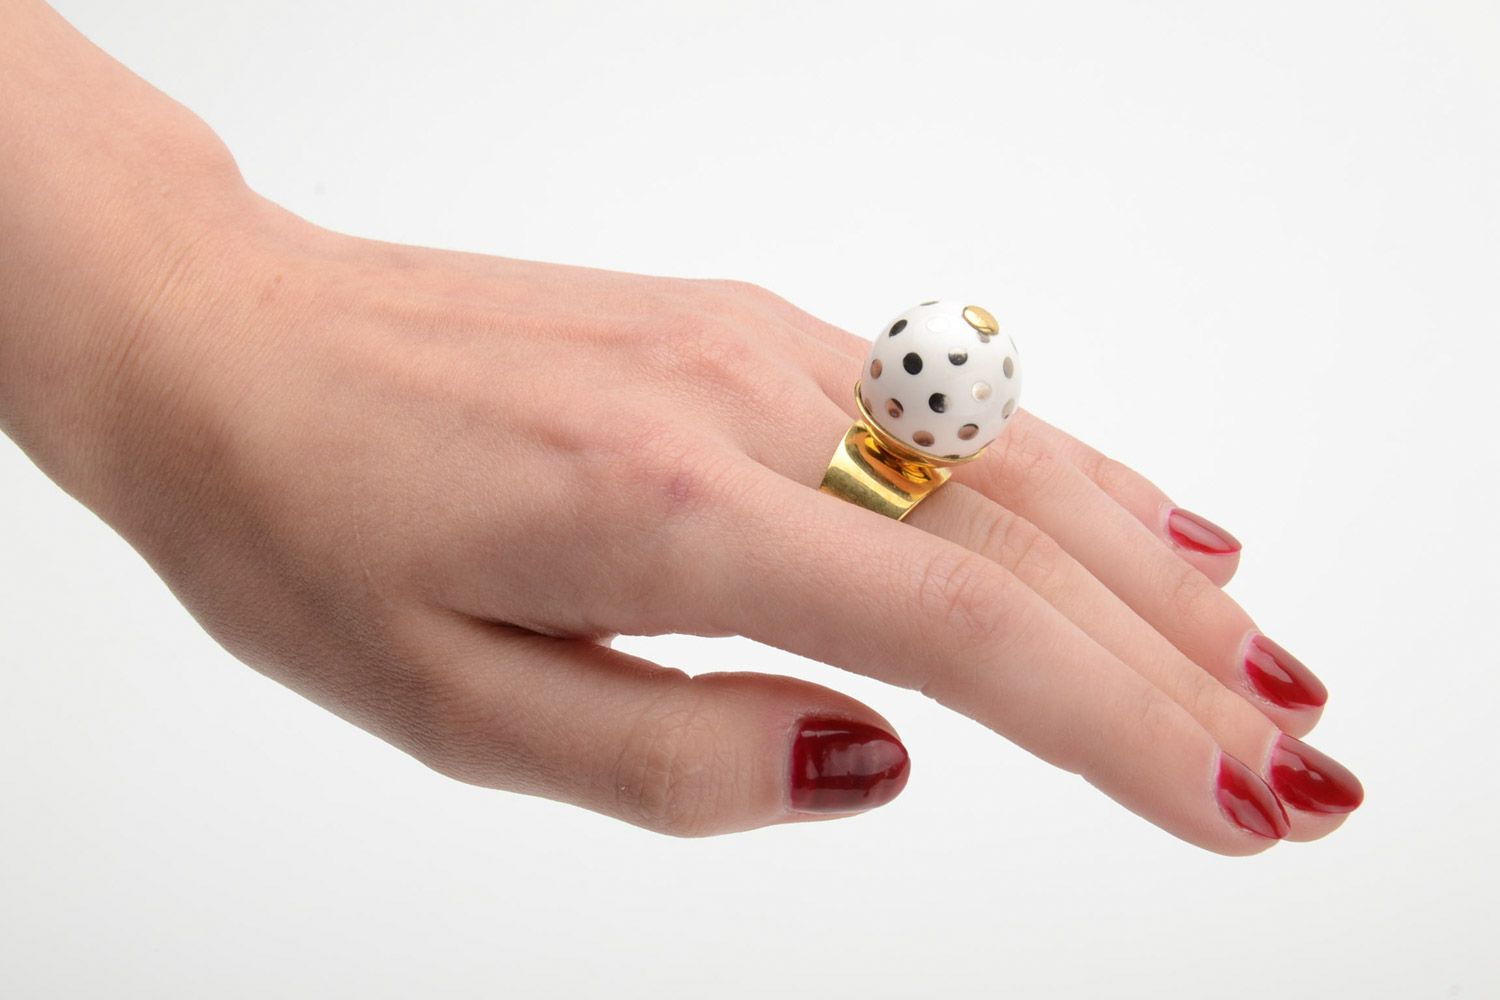 Handmade designer ring with latten basis and white polka dot ceramic bead photo 5